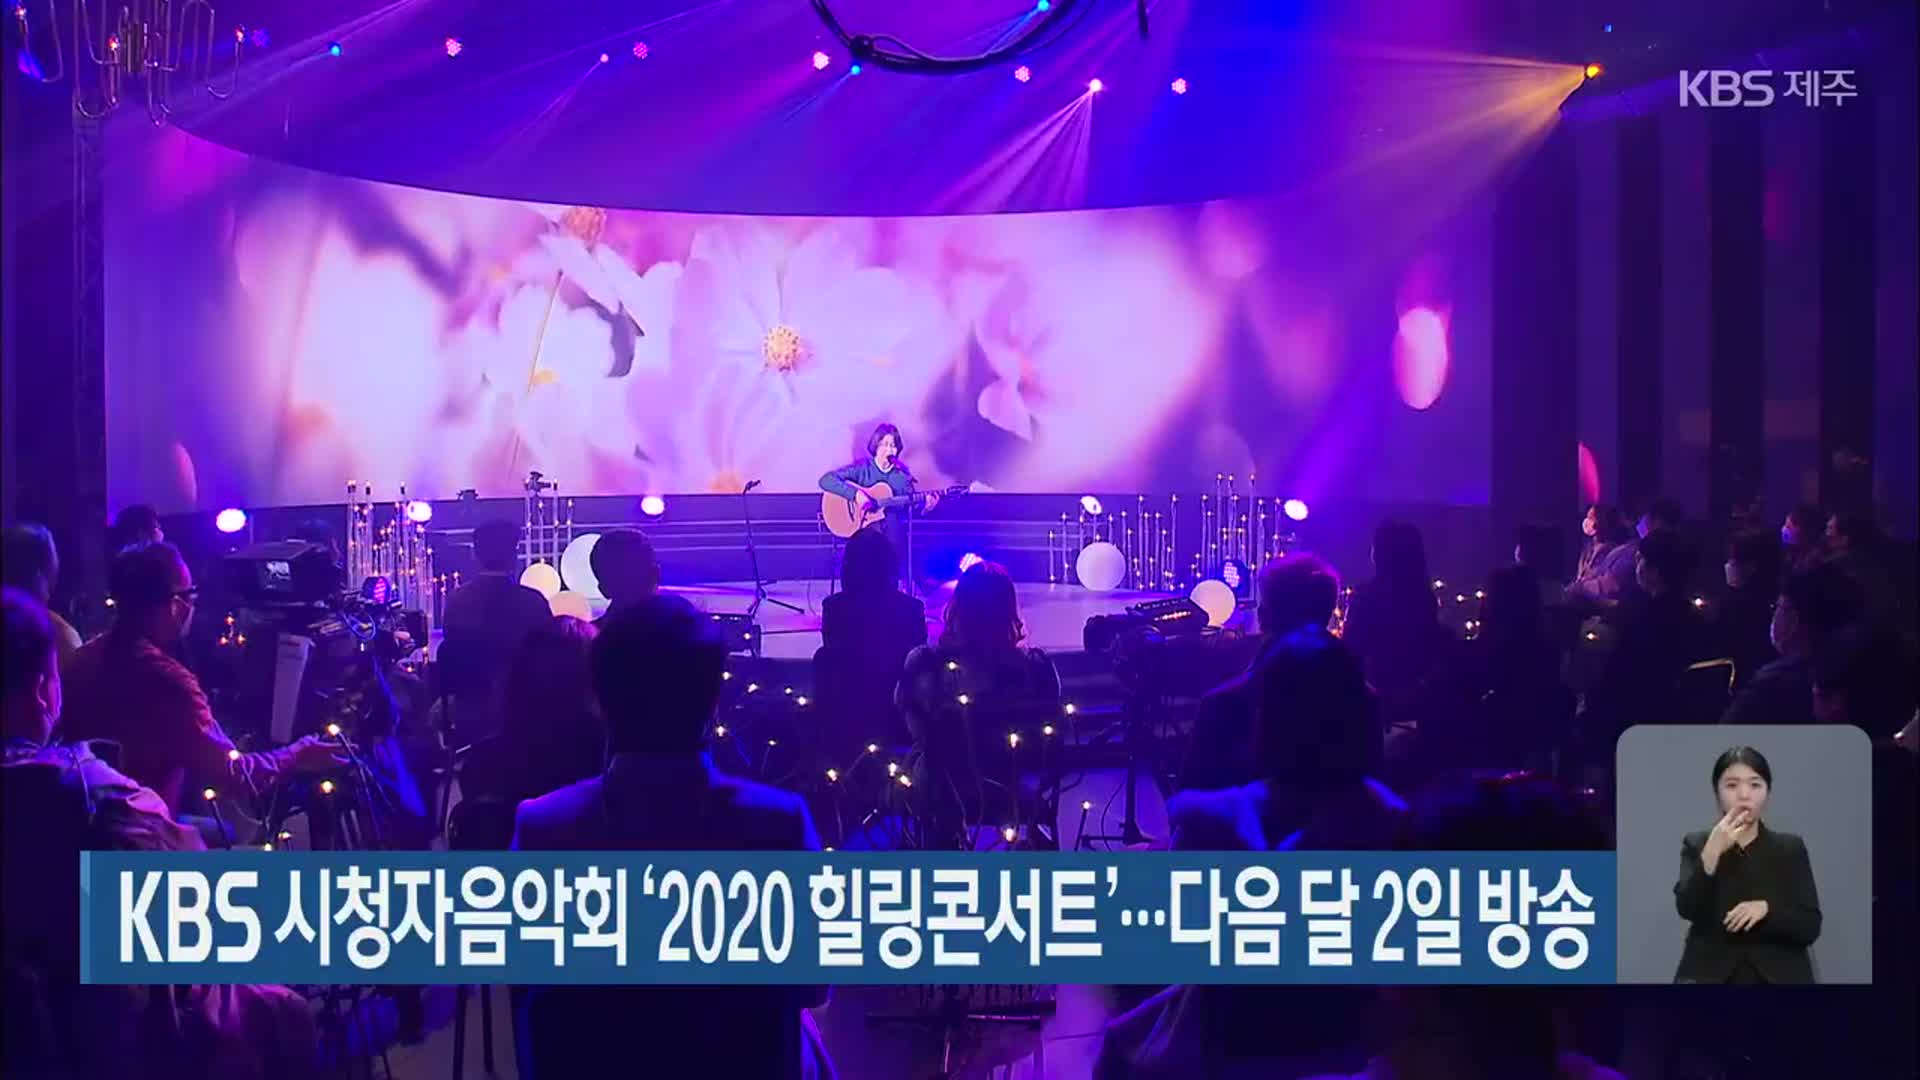 KBS 시청자음악회 ‘2020 힐링콘서트’…다음 달 2일 방송